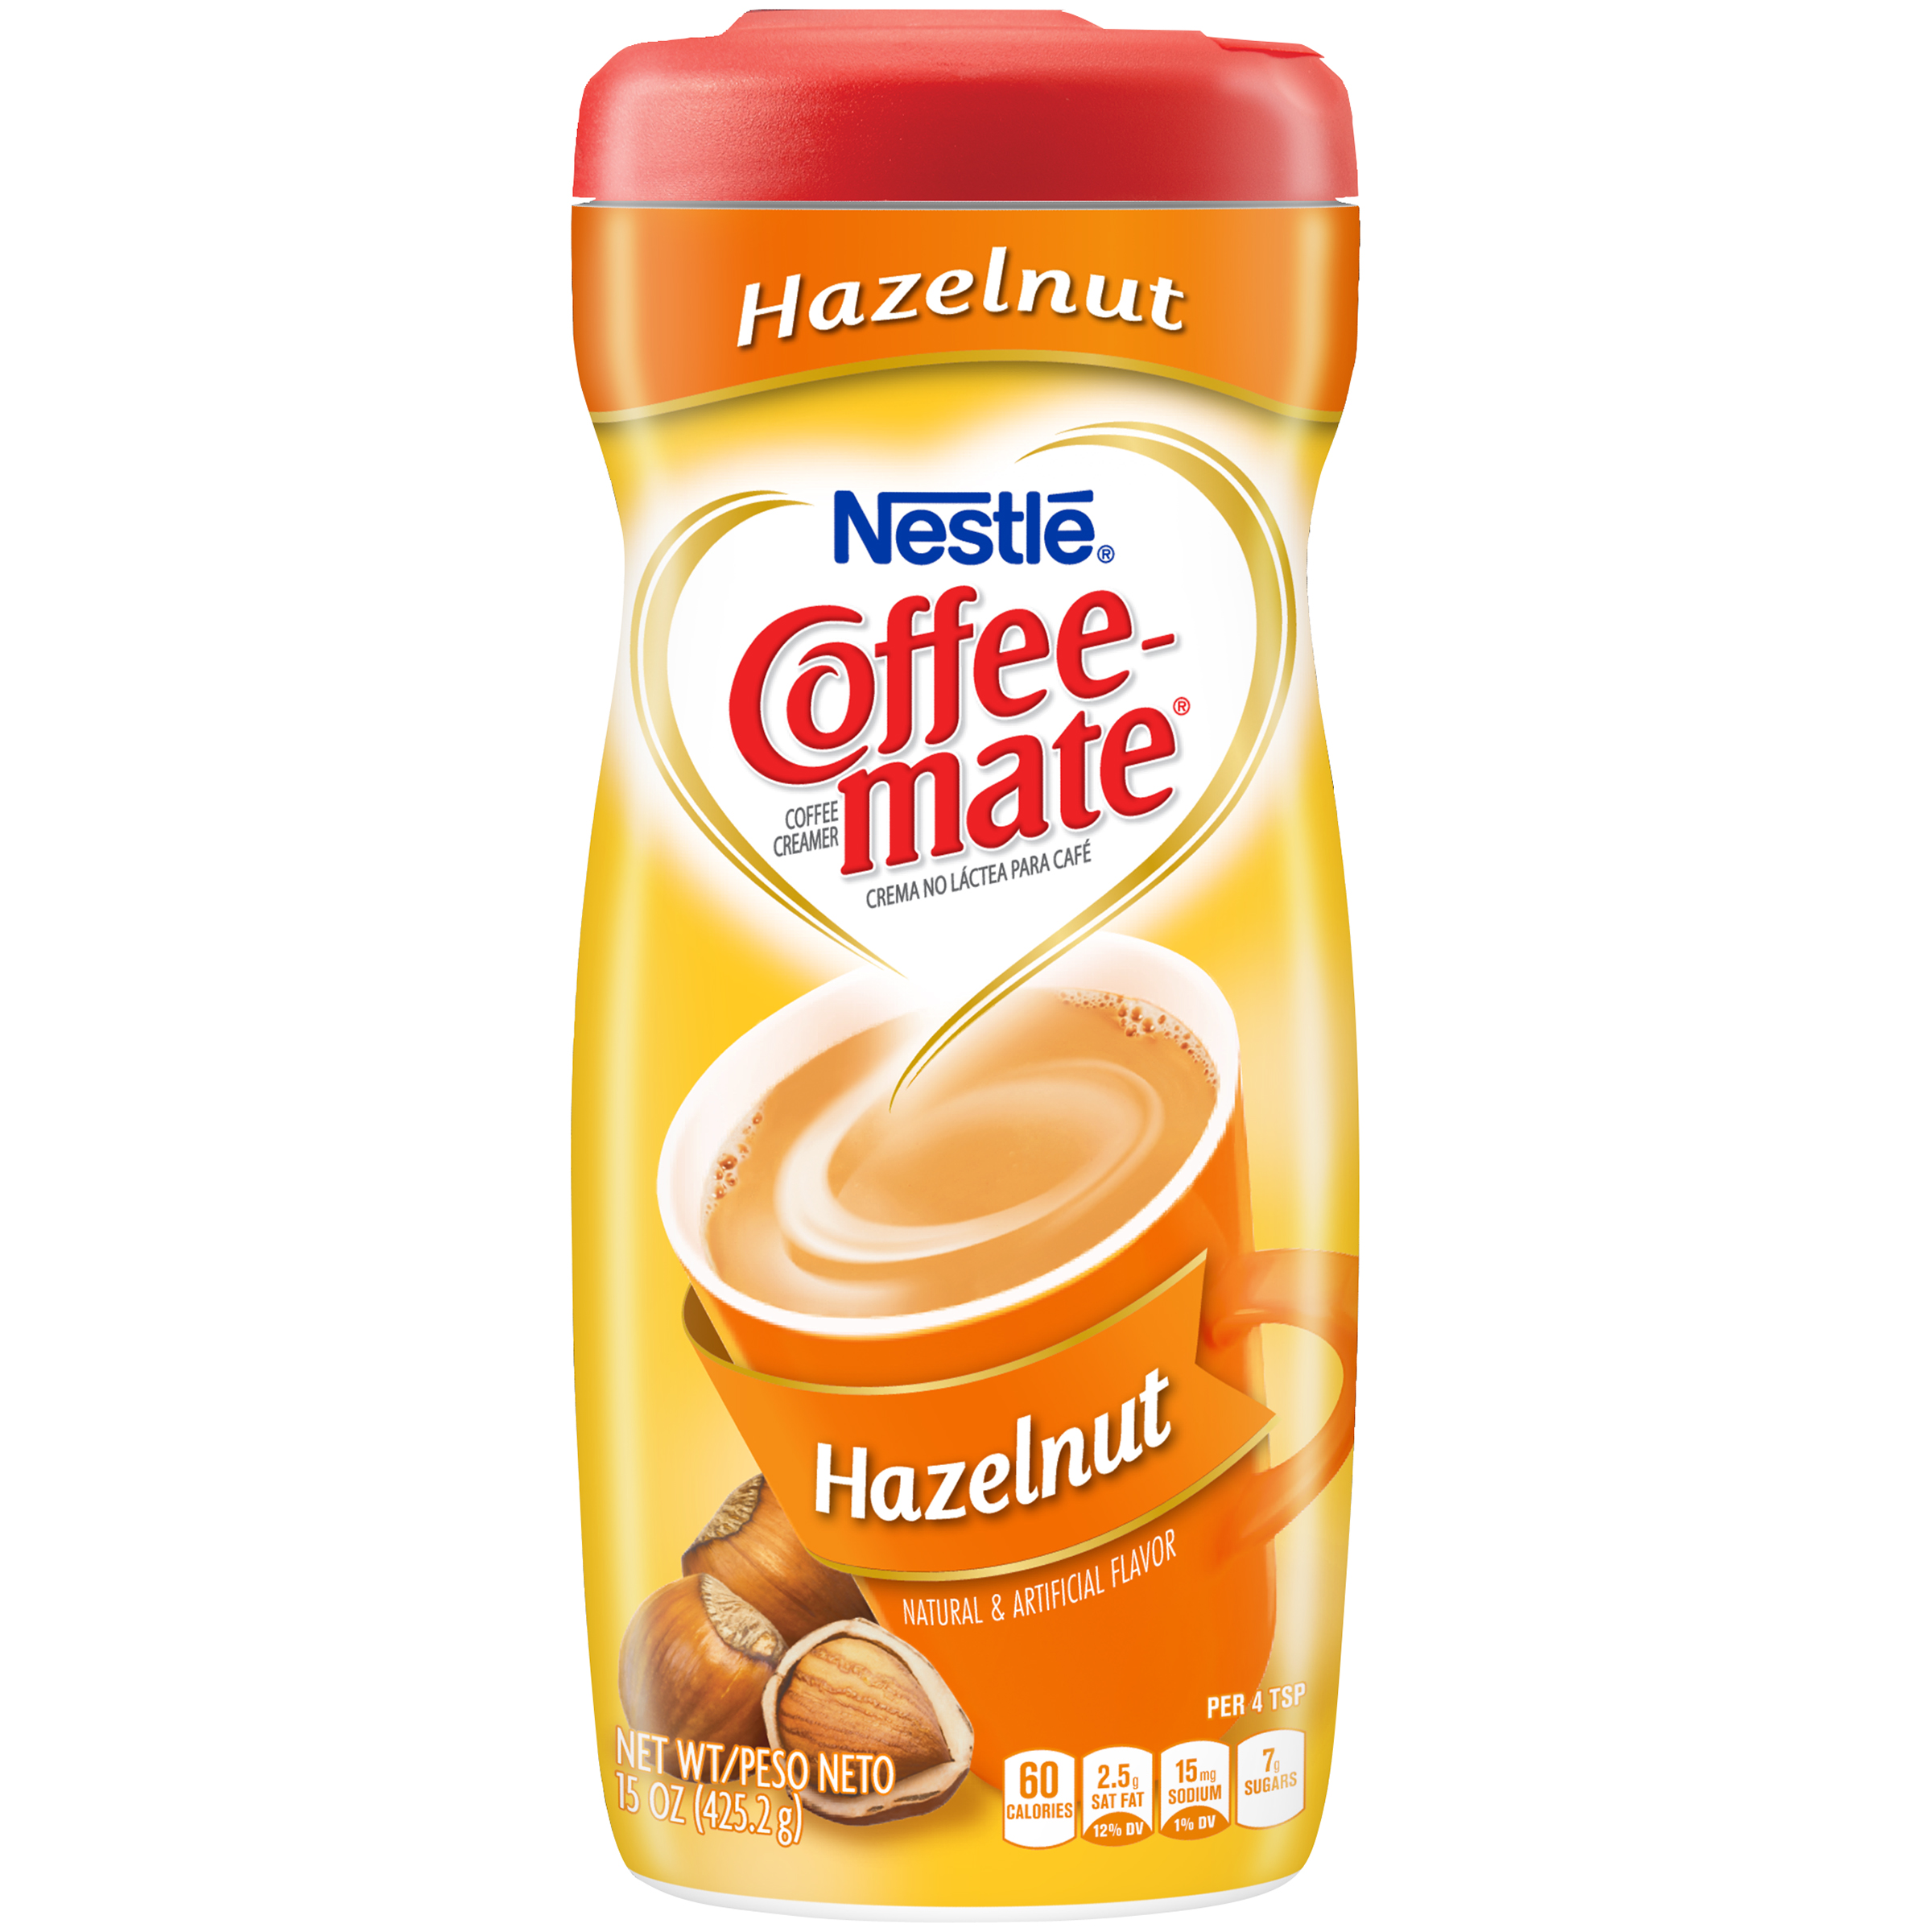 Nestlé Coffee Mate French Vanilla Powder Creamer 425 g - Crema